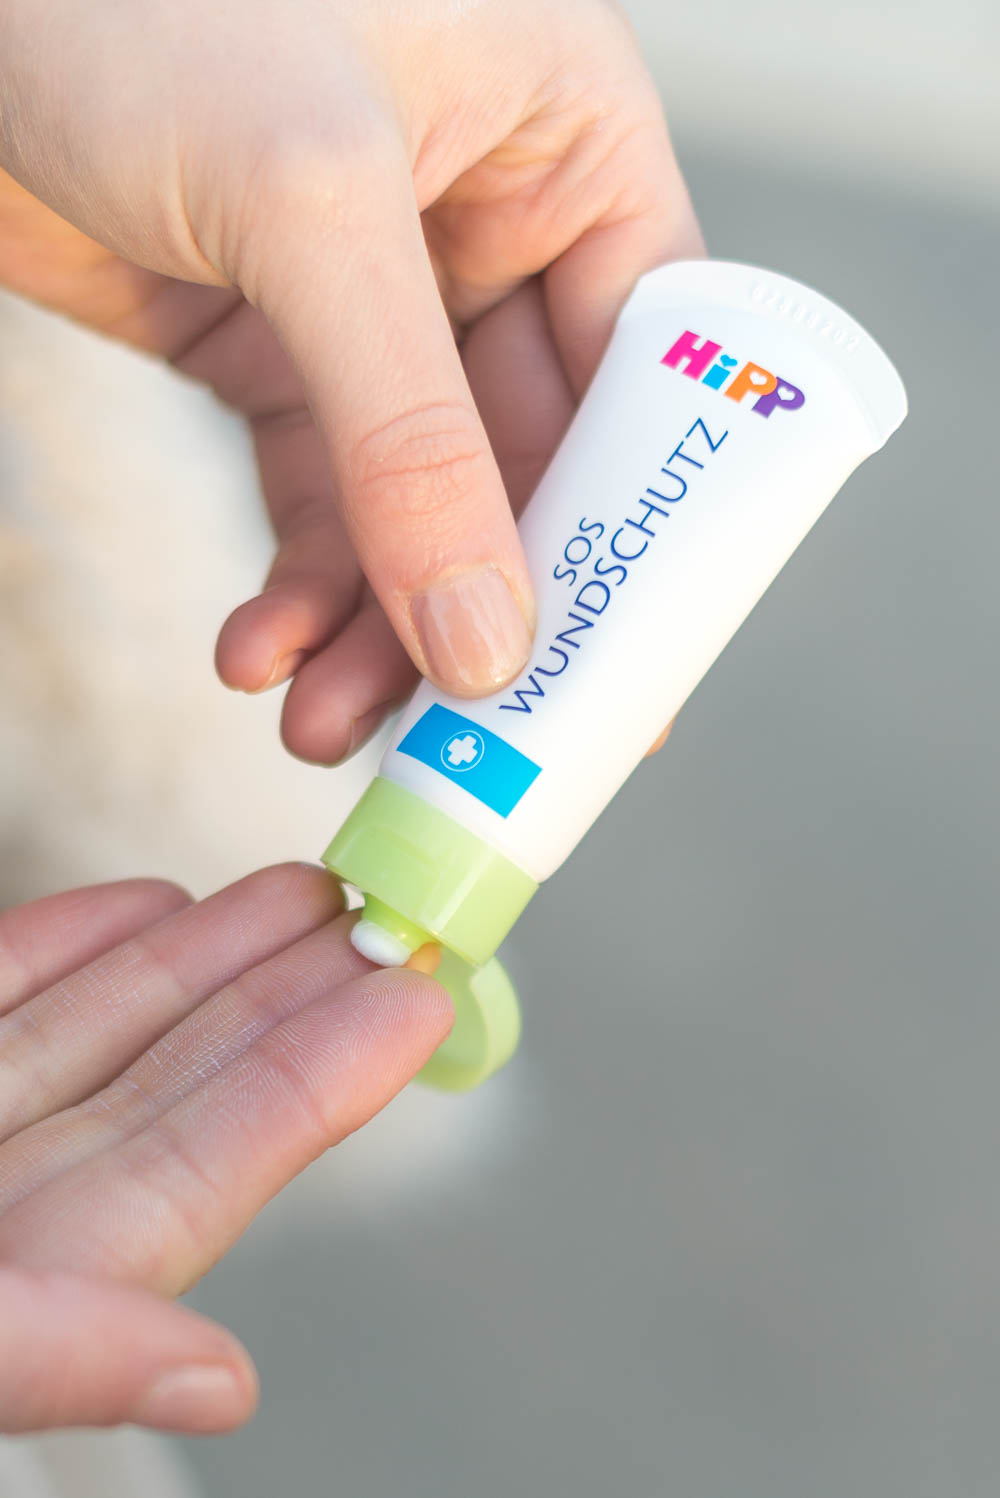 Erste Hilfe bei gereizter Haut-HiPP SOS Wundschutz-Beautyblog-andysparkles